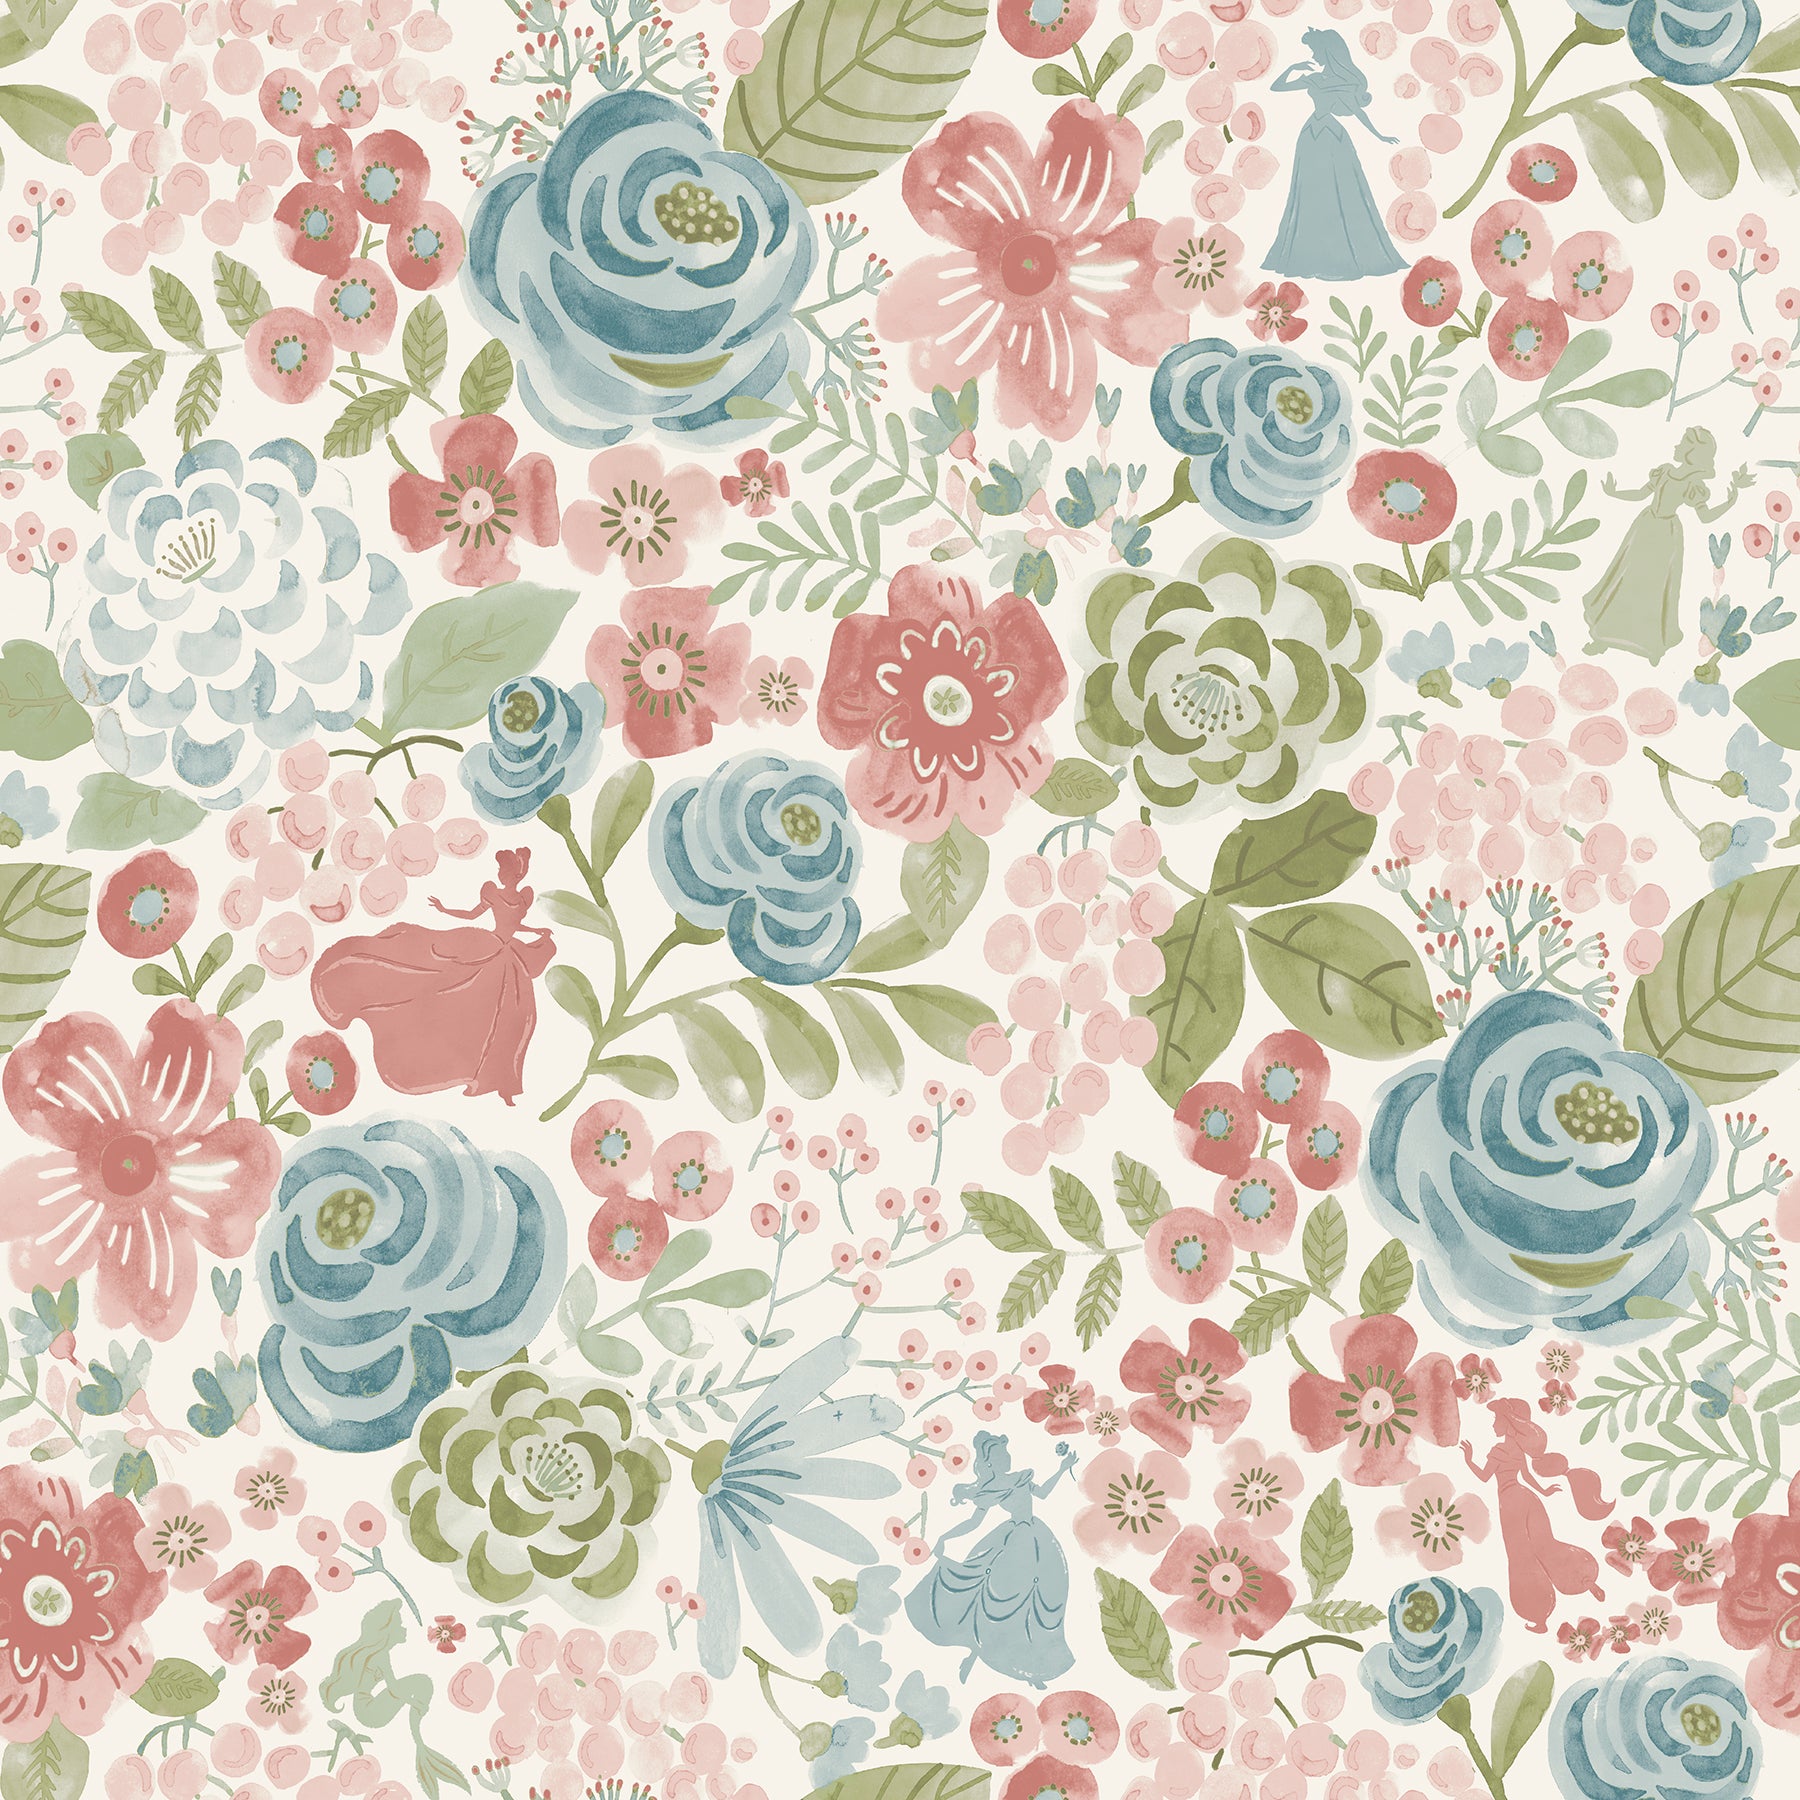 Disney Princess Watercolor Floral Peel & Stick Wallpaper Peel and Stick Wallpaper RoomMates Decor Roll Blush 